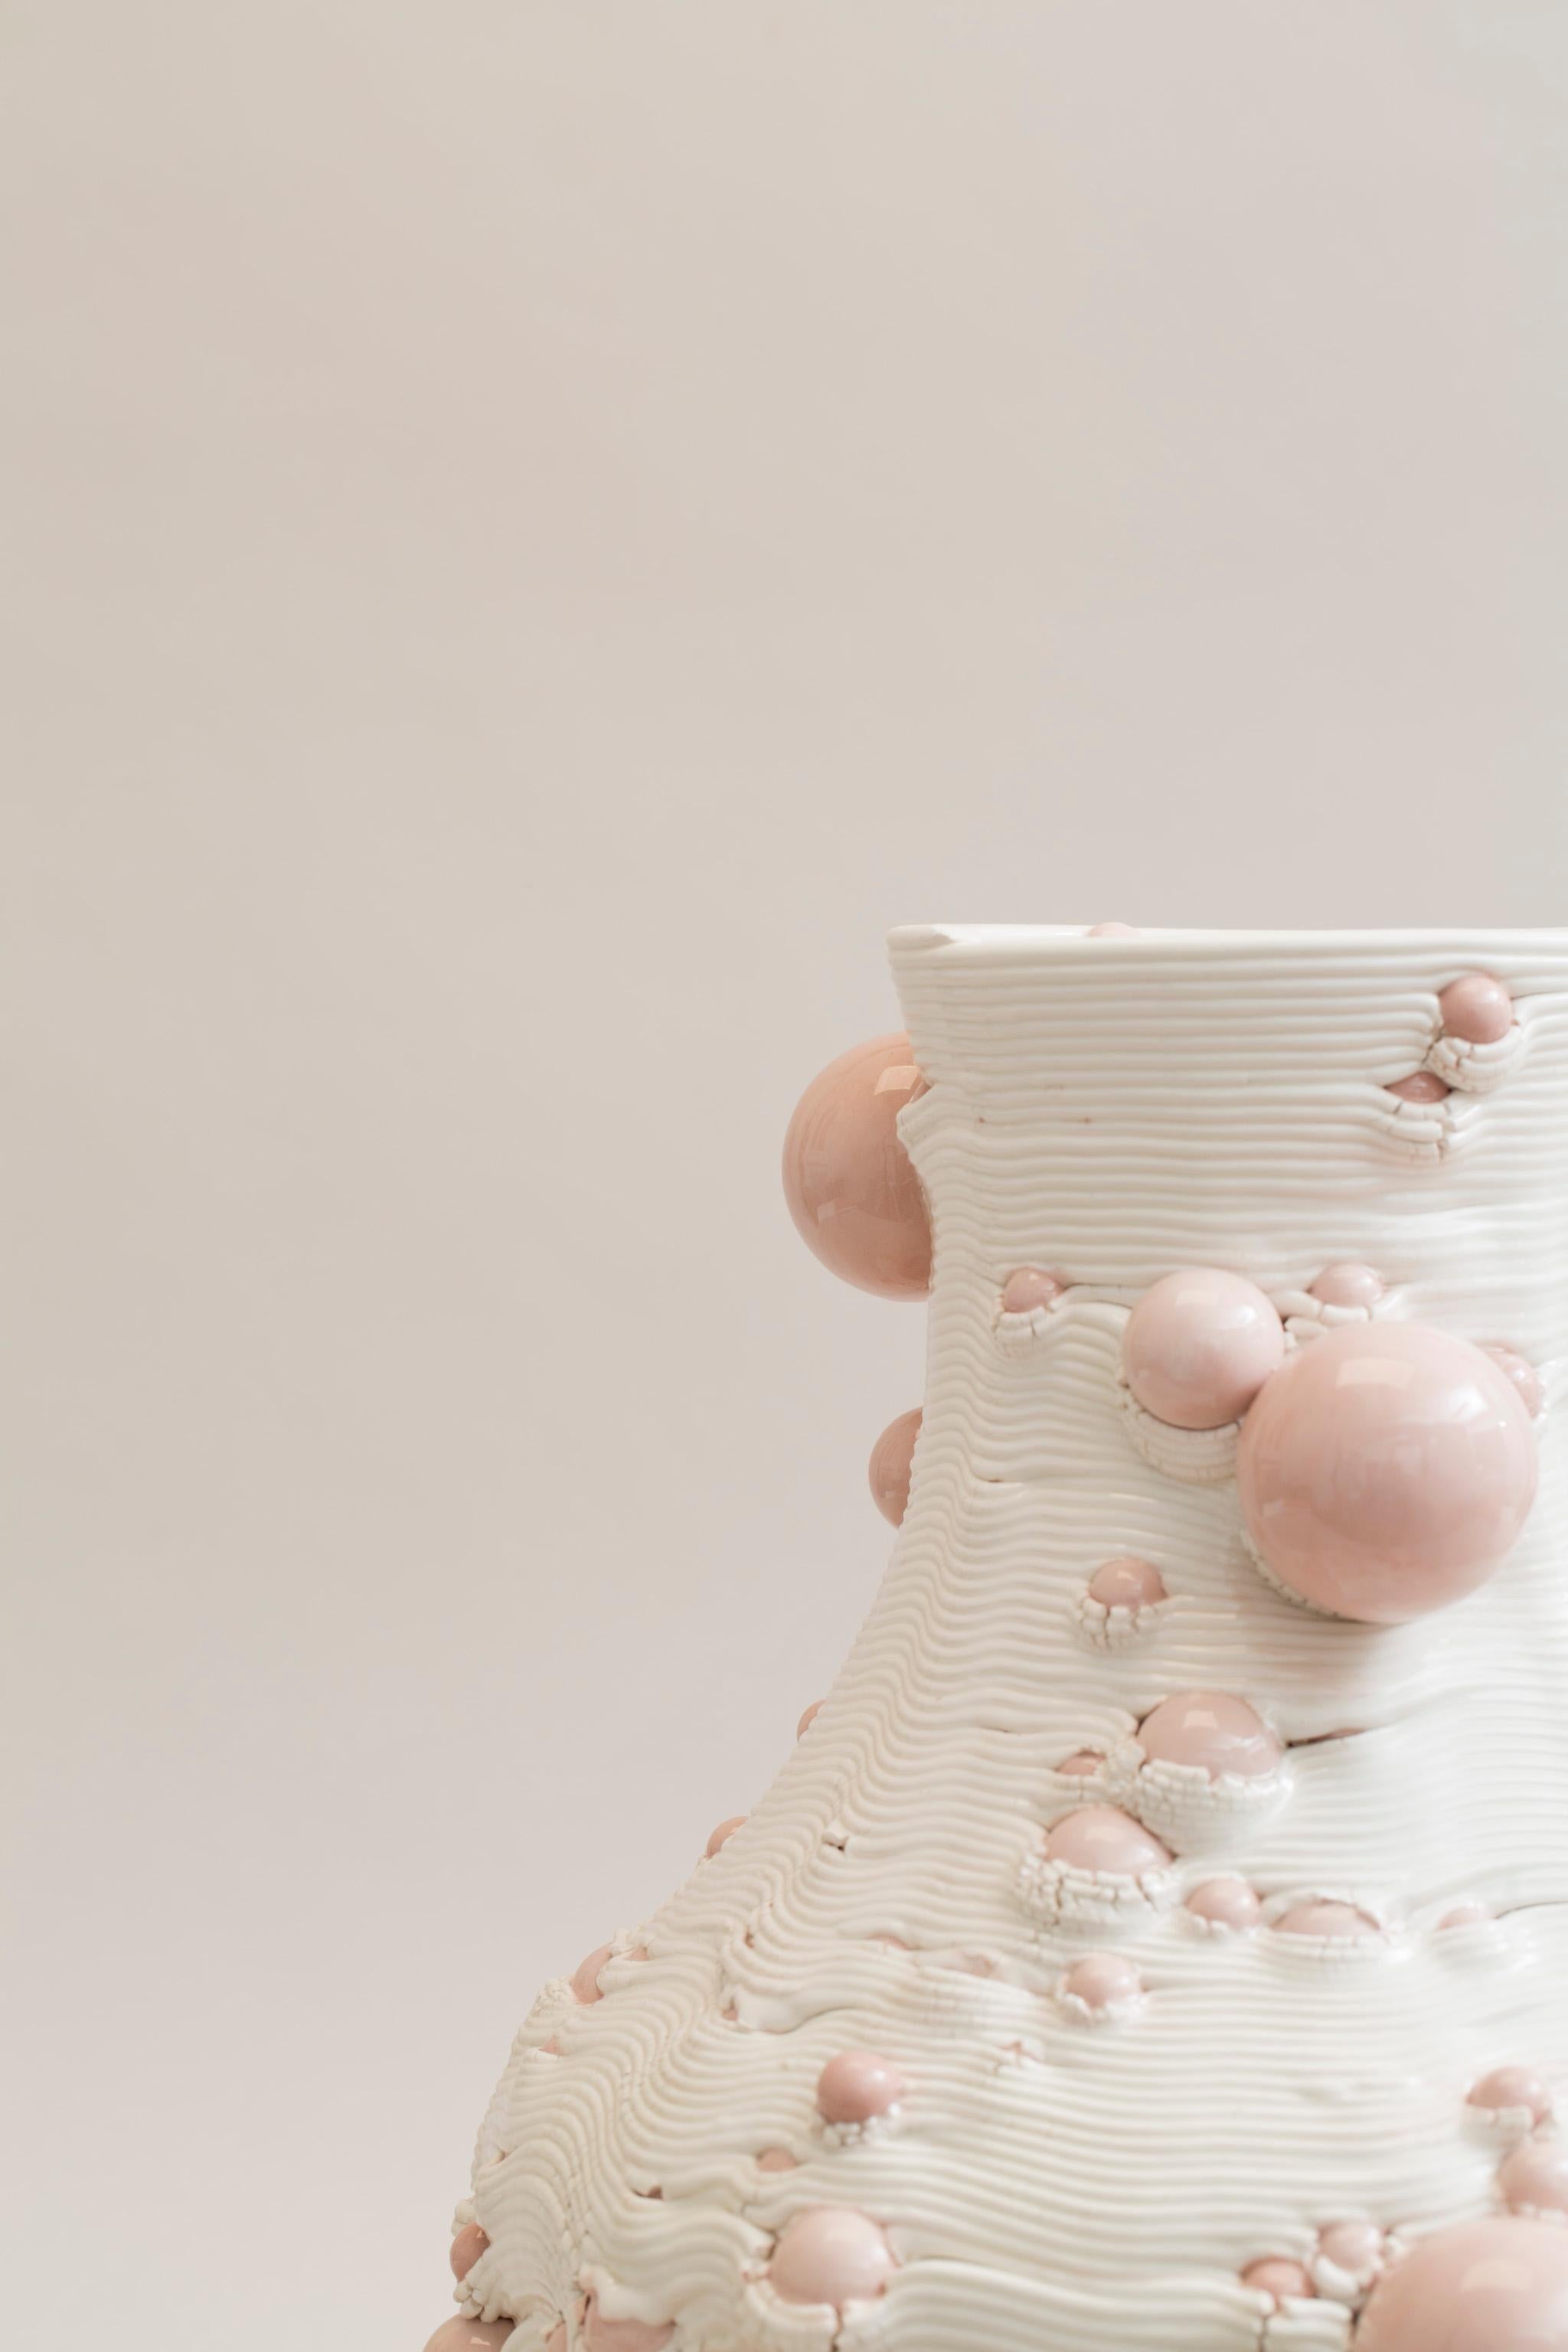 White Ceramic Sculptural Vase Italian Contemporary, 21st Century contemporary For Sale 9